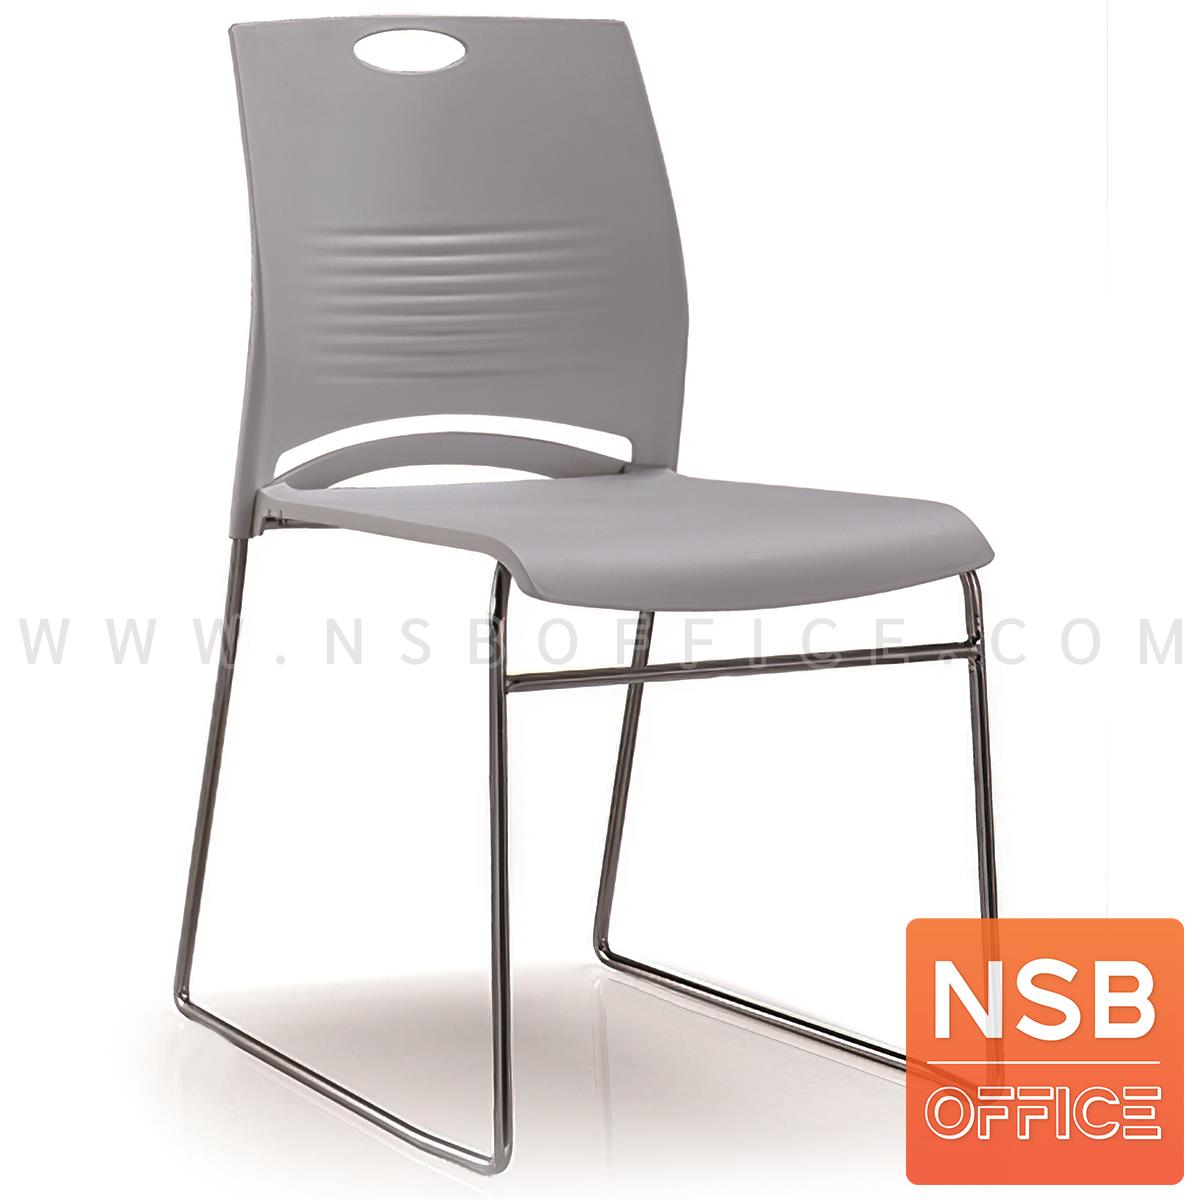 B05A175:เก้าอี้อเนกประสงค์เฟรมโพลี่ รุ่น Brick (บริค) โครงขาเหล็ก 